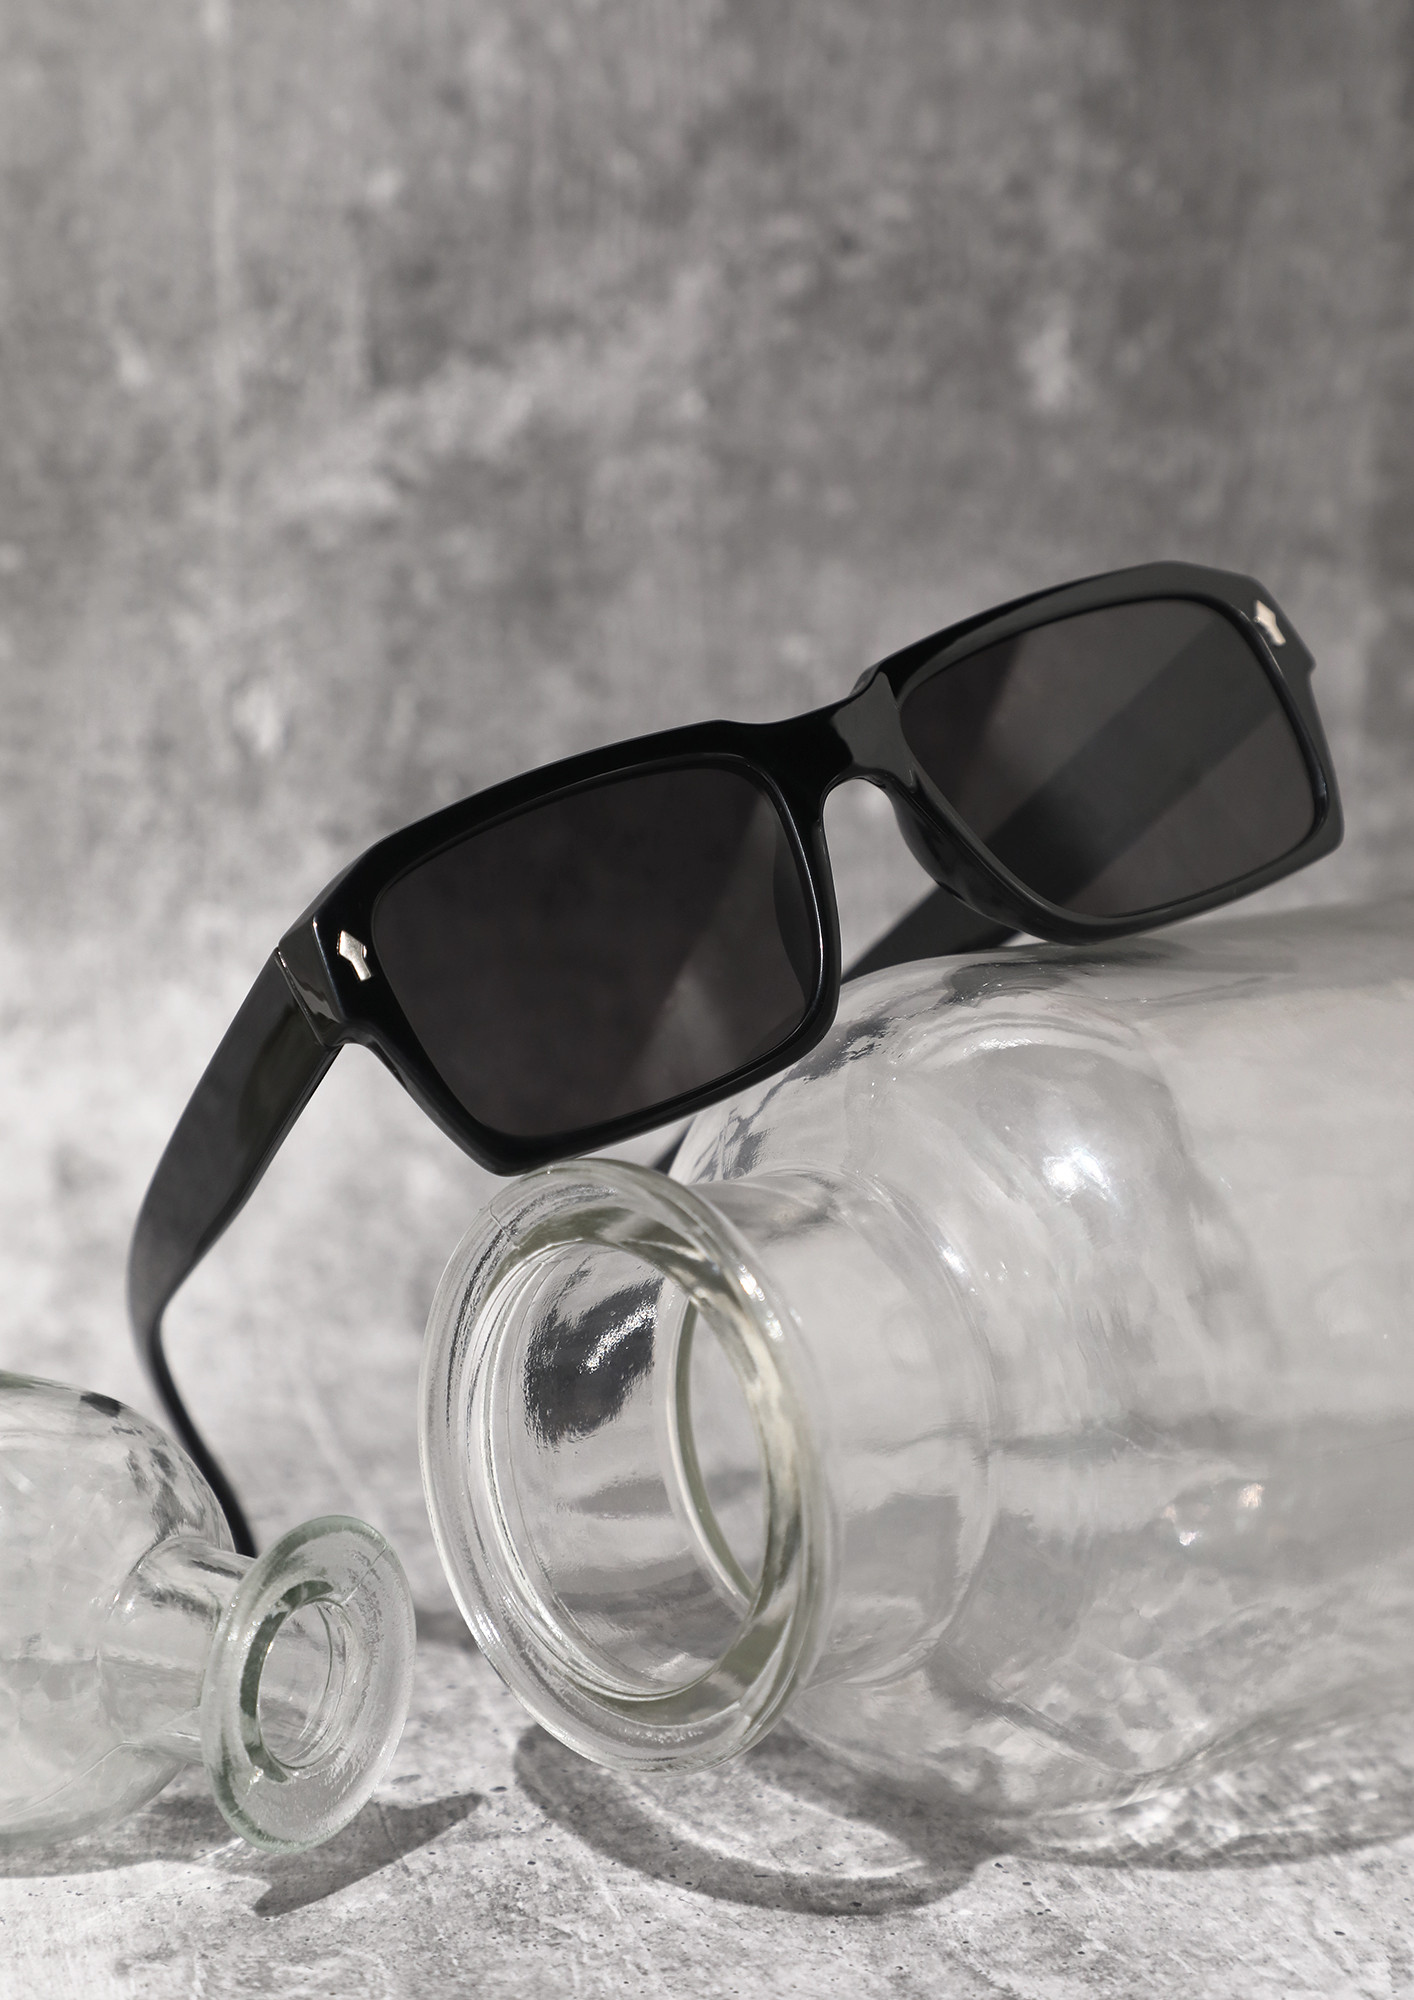 Ray-Ban Meta Wayfarer Smart Glasses Sunglasses Shiny Black Frame w/Clear  Lens | eBay